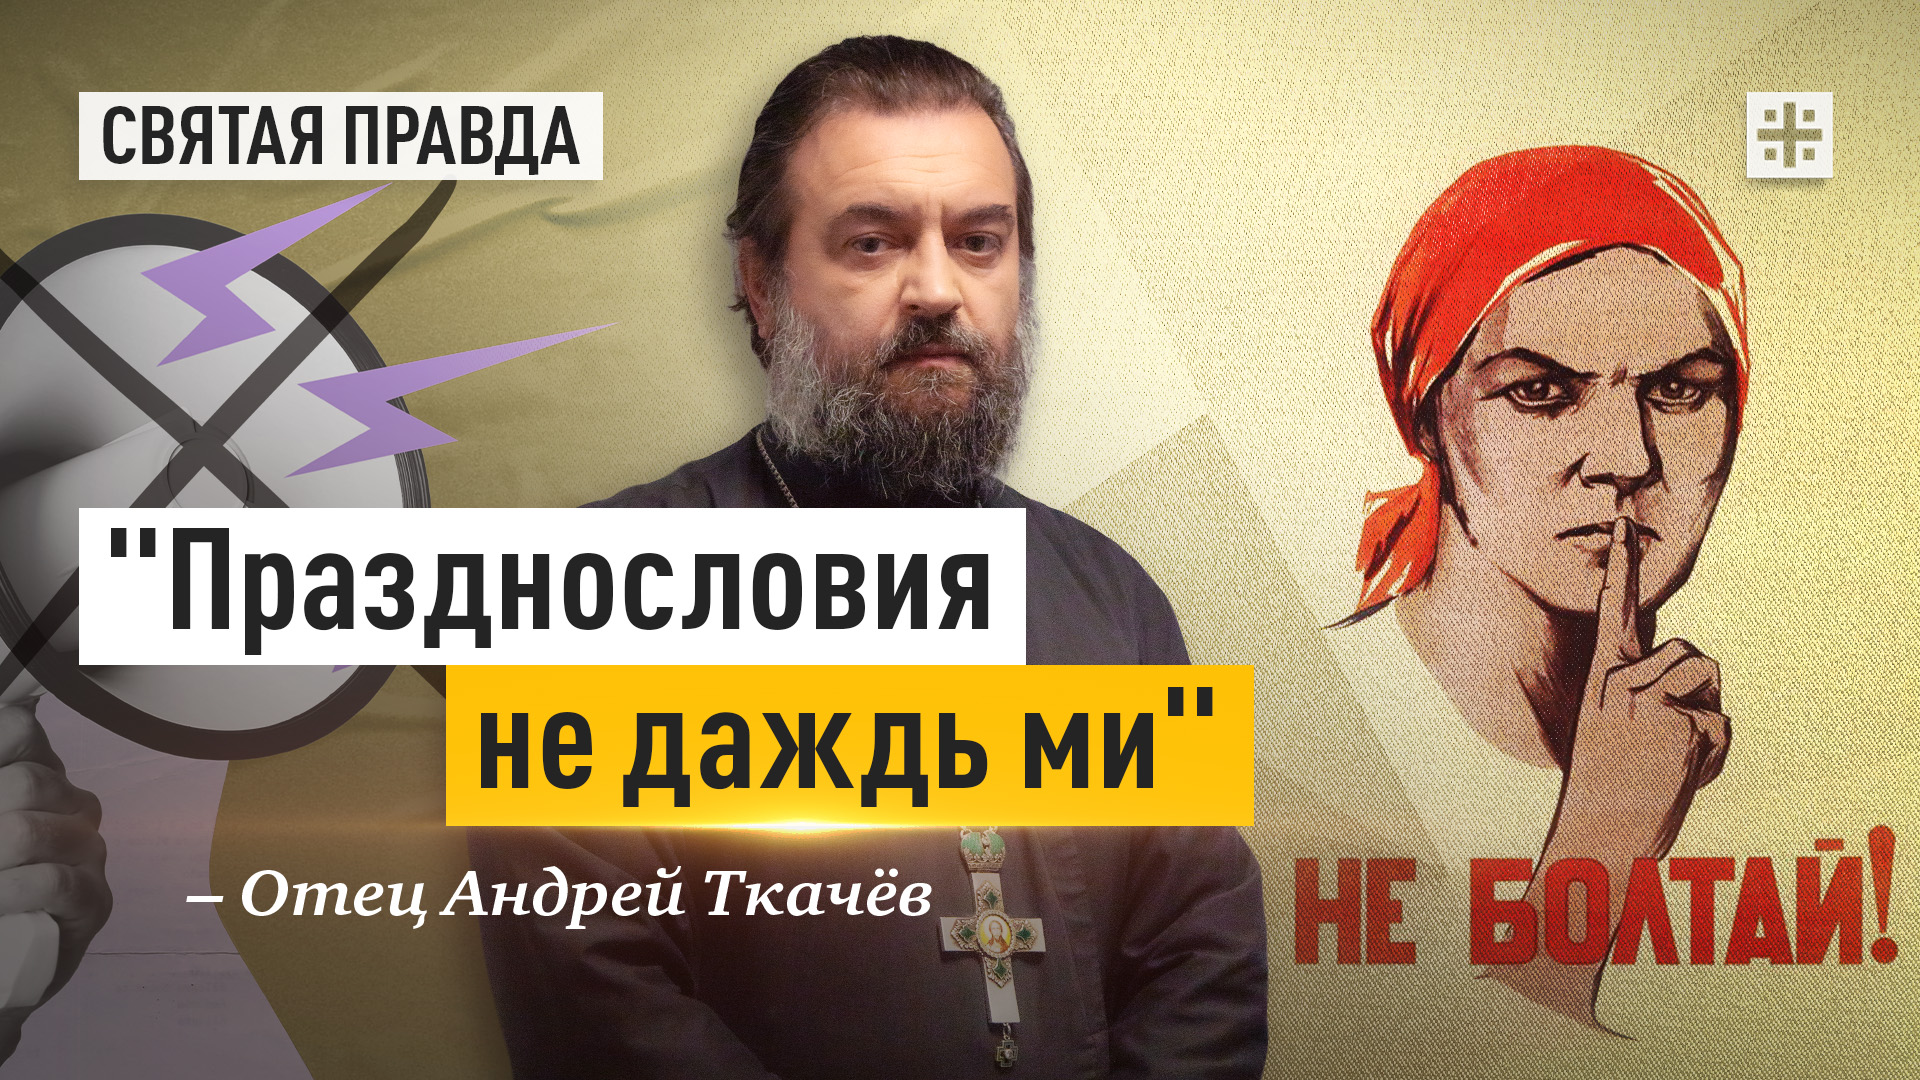 "Празднословия не даждь ми": Нам всем крайне важно научиться молчанию — отец Андрей Ткачёв